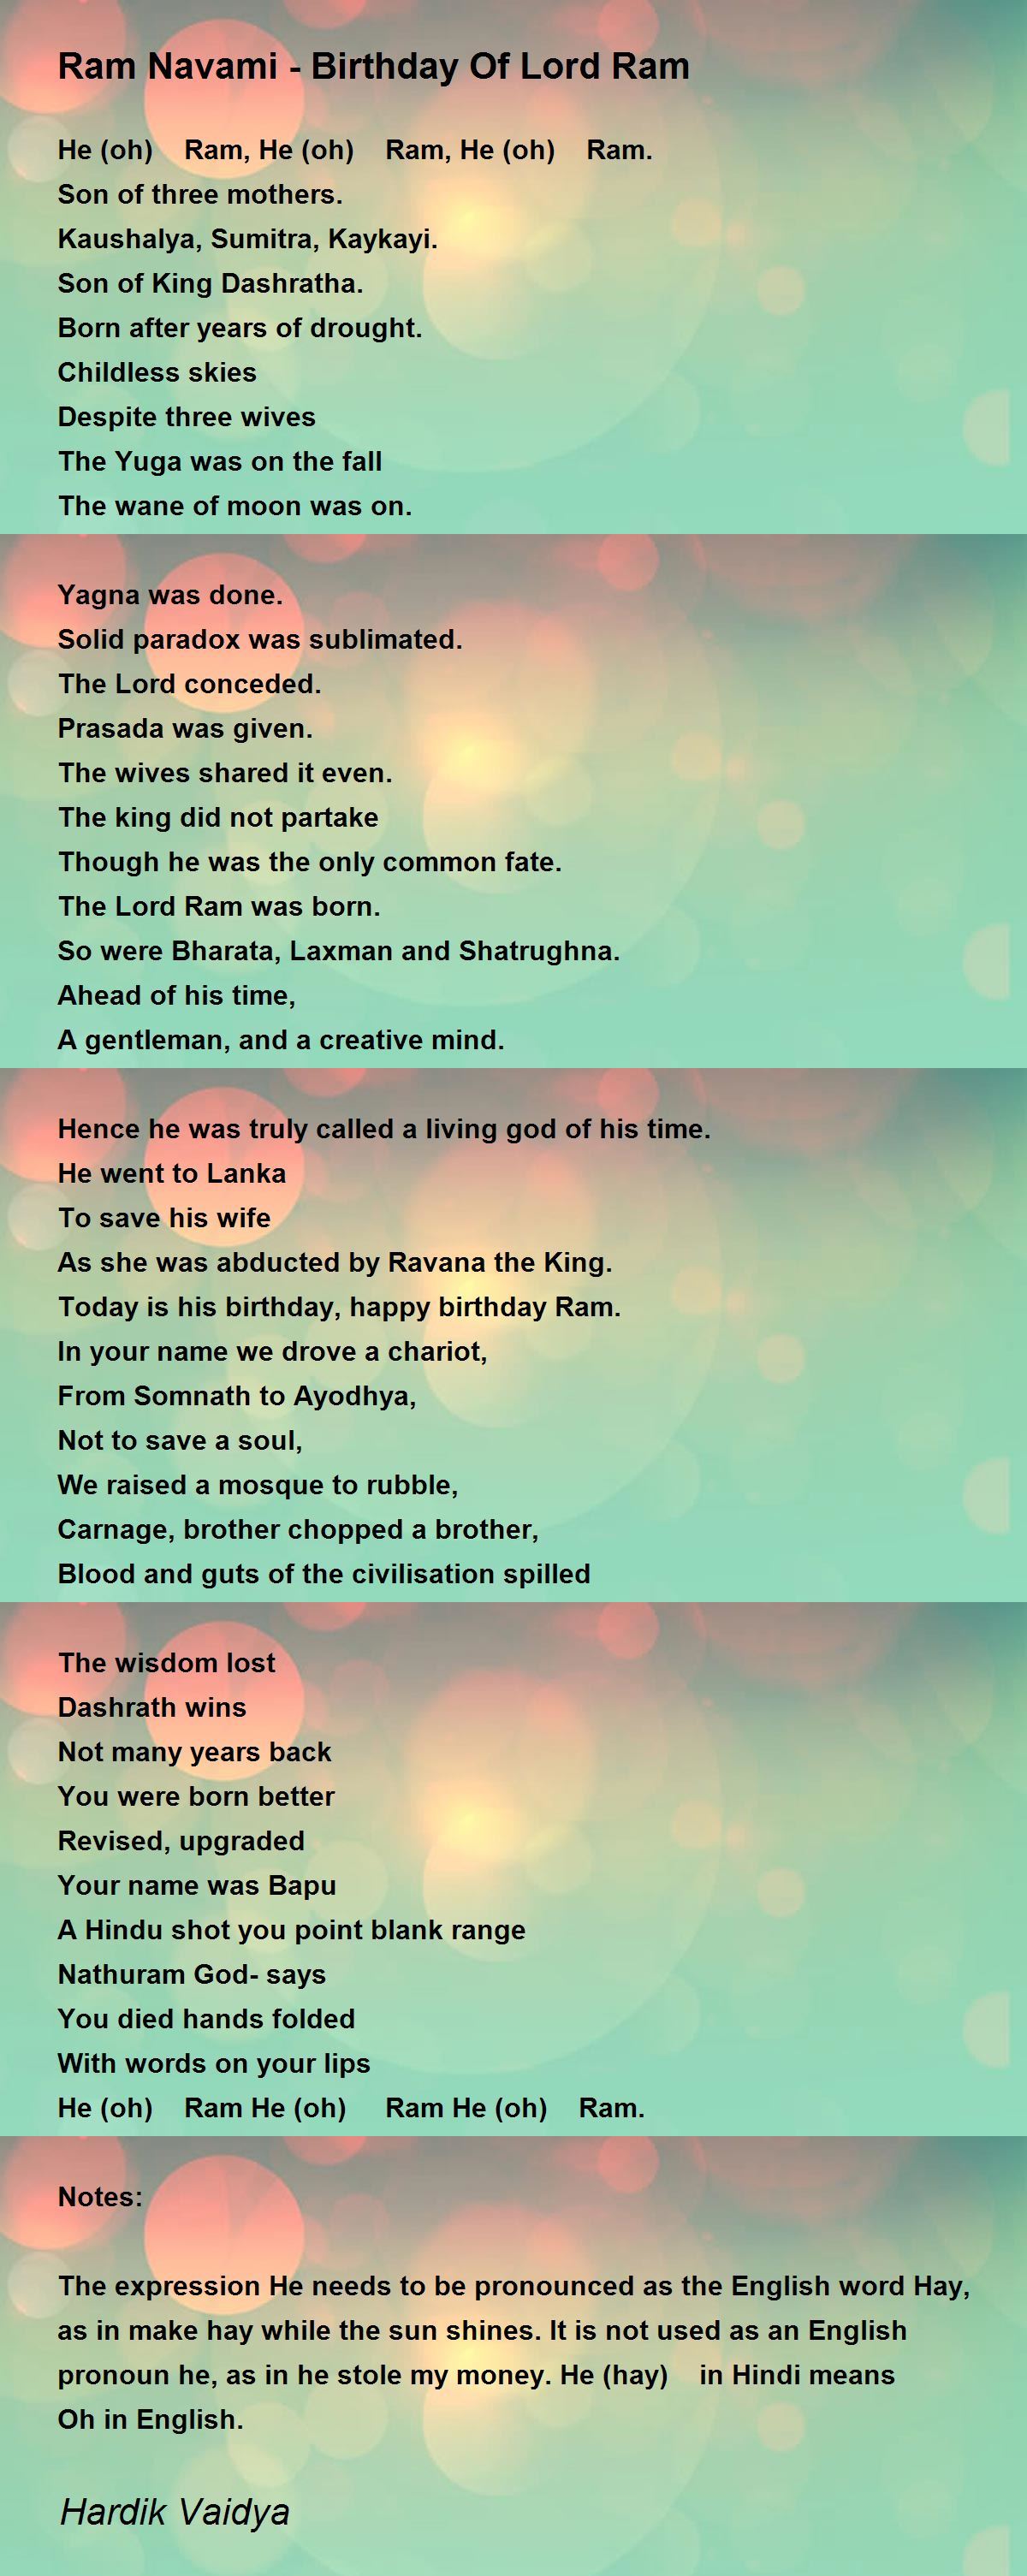 Tomhed Unravel Garanti Ram Navami - Birthday Of Lord Ram - Ram Navami - Birthday Of Lord Ram Poem  by Hardik Vaidya